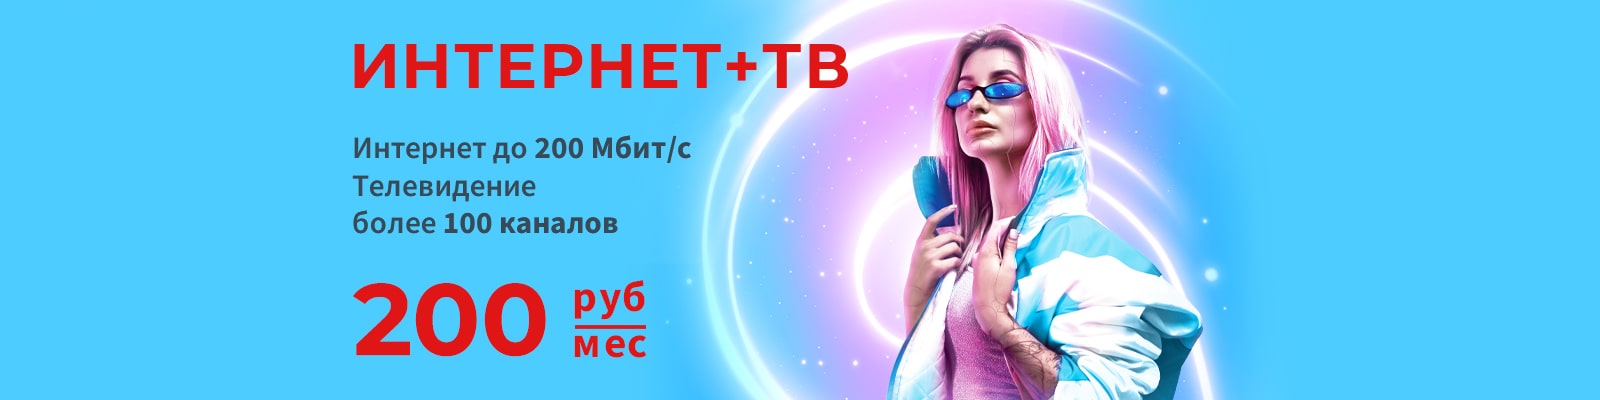 Интернет до 200 Мбит/с, телевидение более 100 каналов за 200 руб/мес от Акадо в Москве